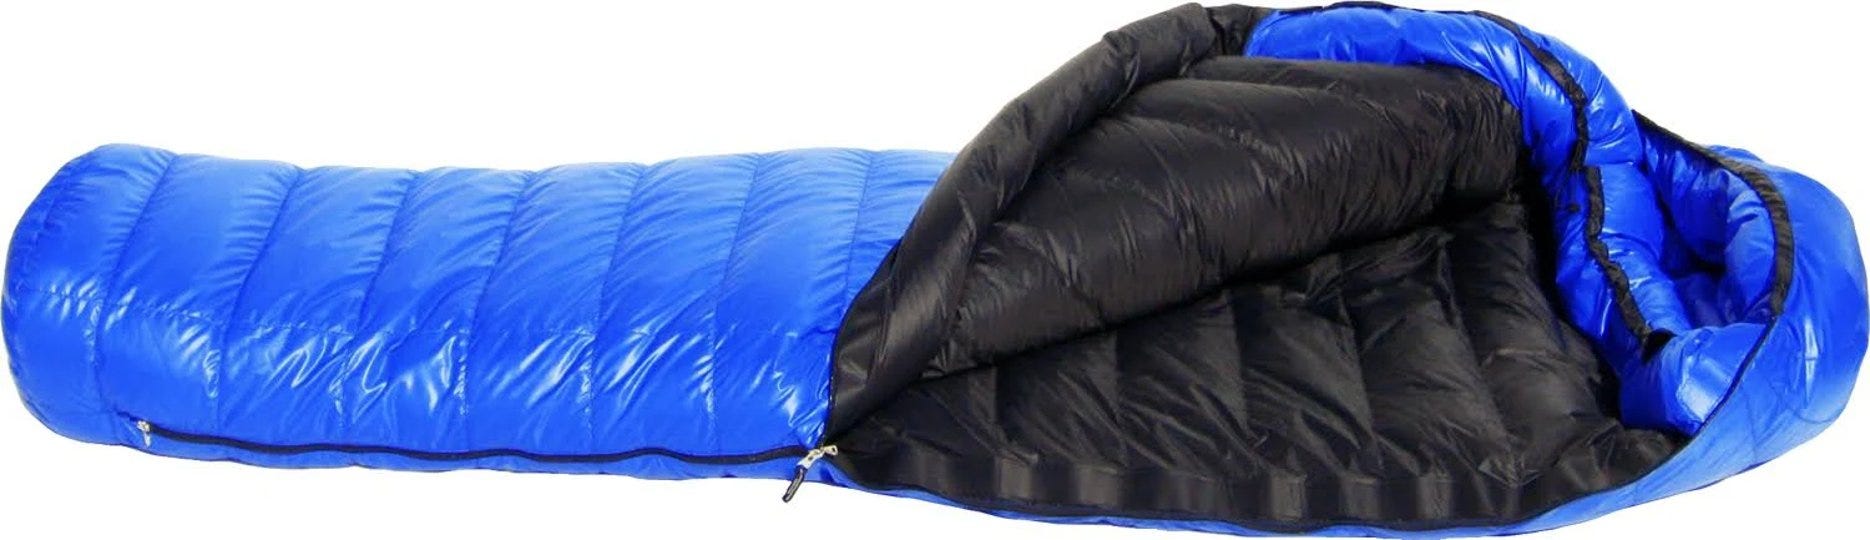 western-mountaineering-antelope-mf-sleeping-bag-1